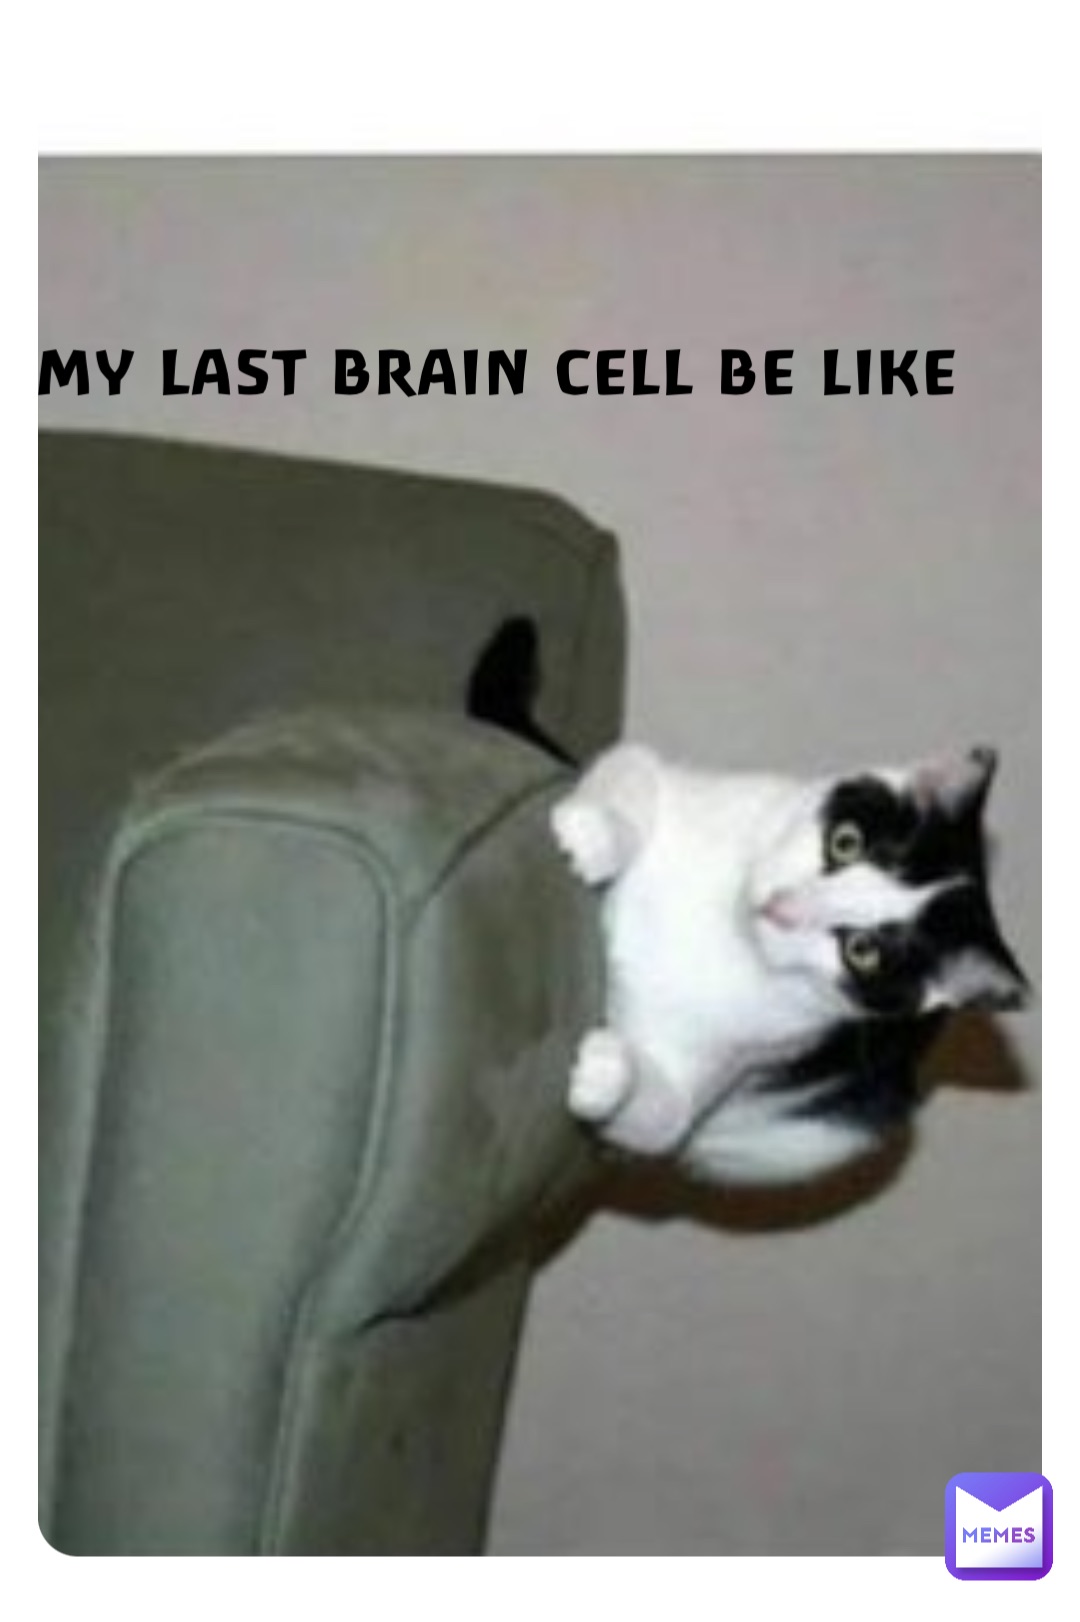 My last brain cell be like